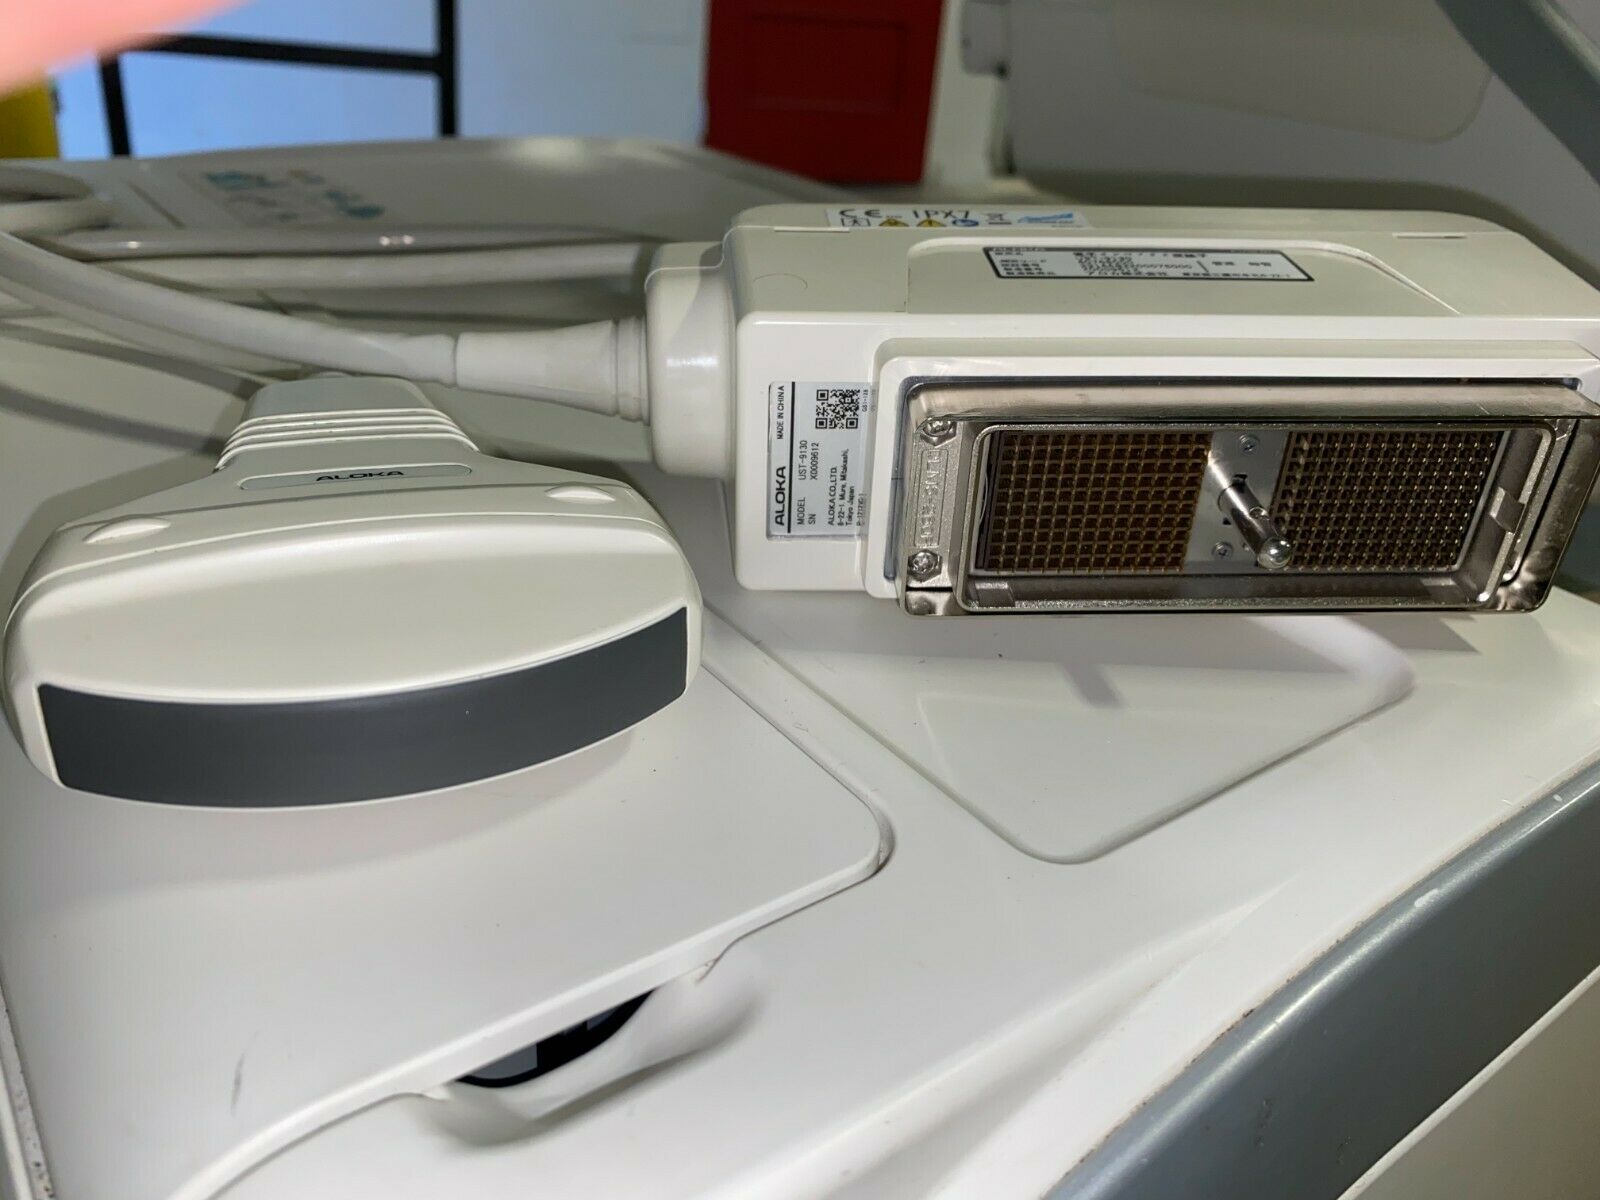 ALOKA Hitachi Prosound F75 Ultrasound UST-9130 Probe   "Year 2014 BIOMED TESTED" DIAGNOSTIC ULTRASOUND MACHINES FOR SALE